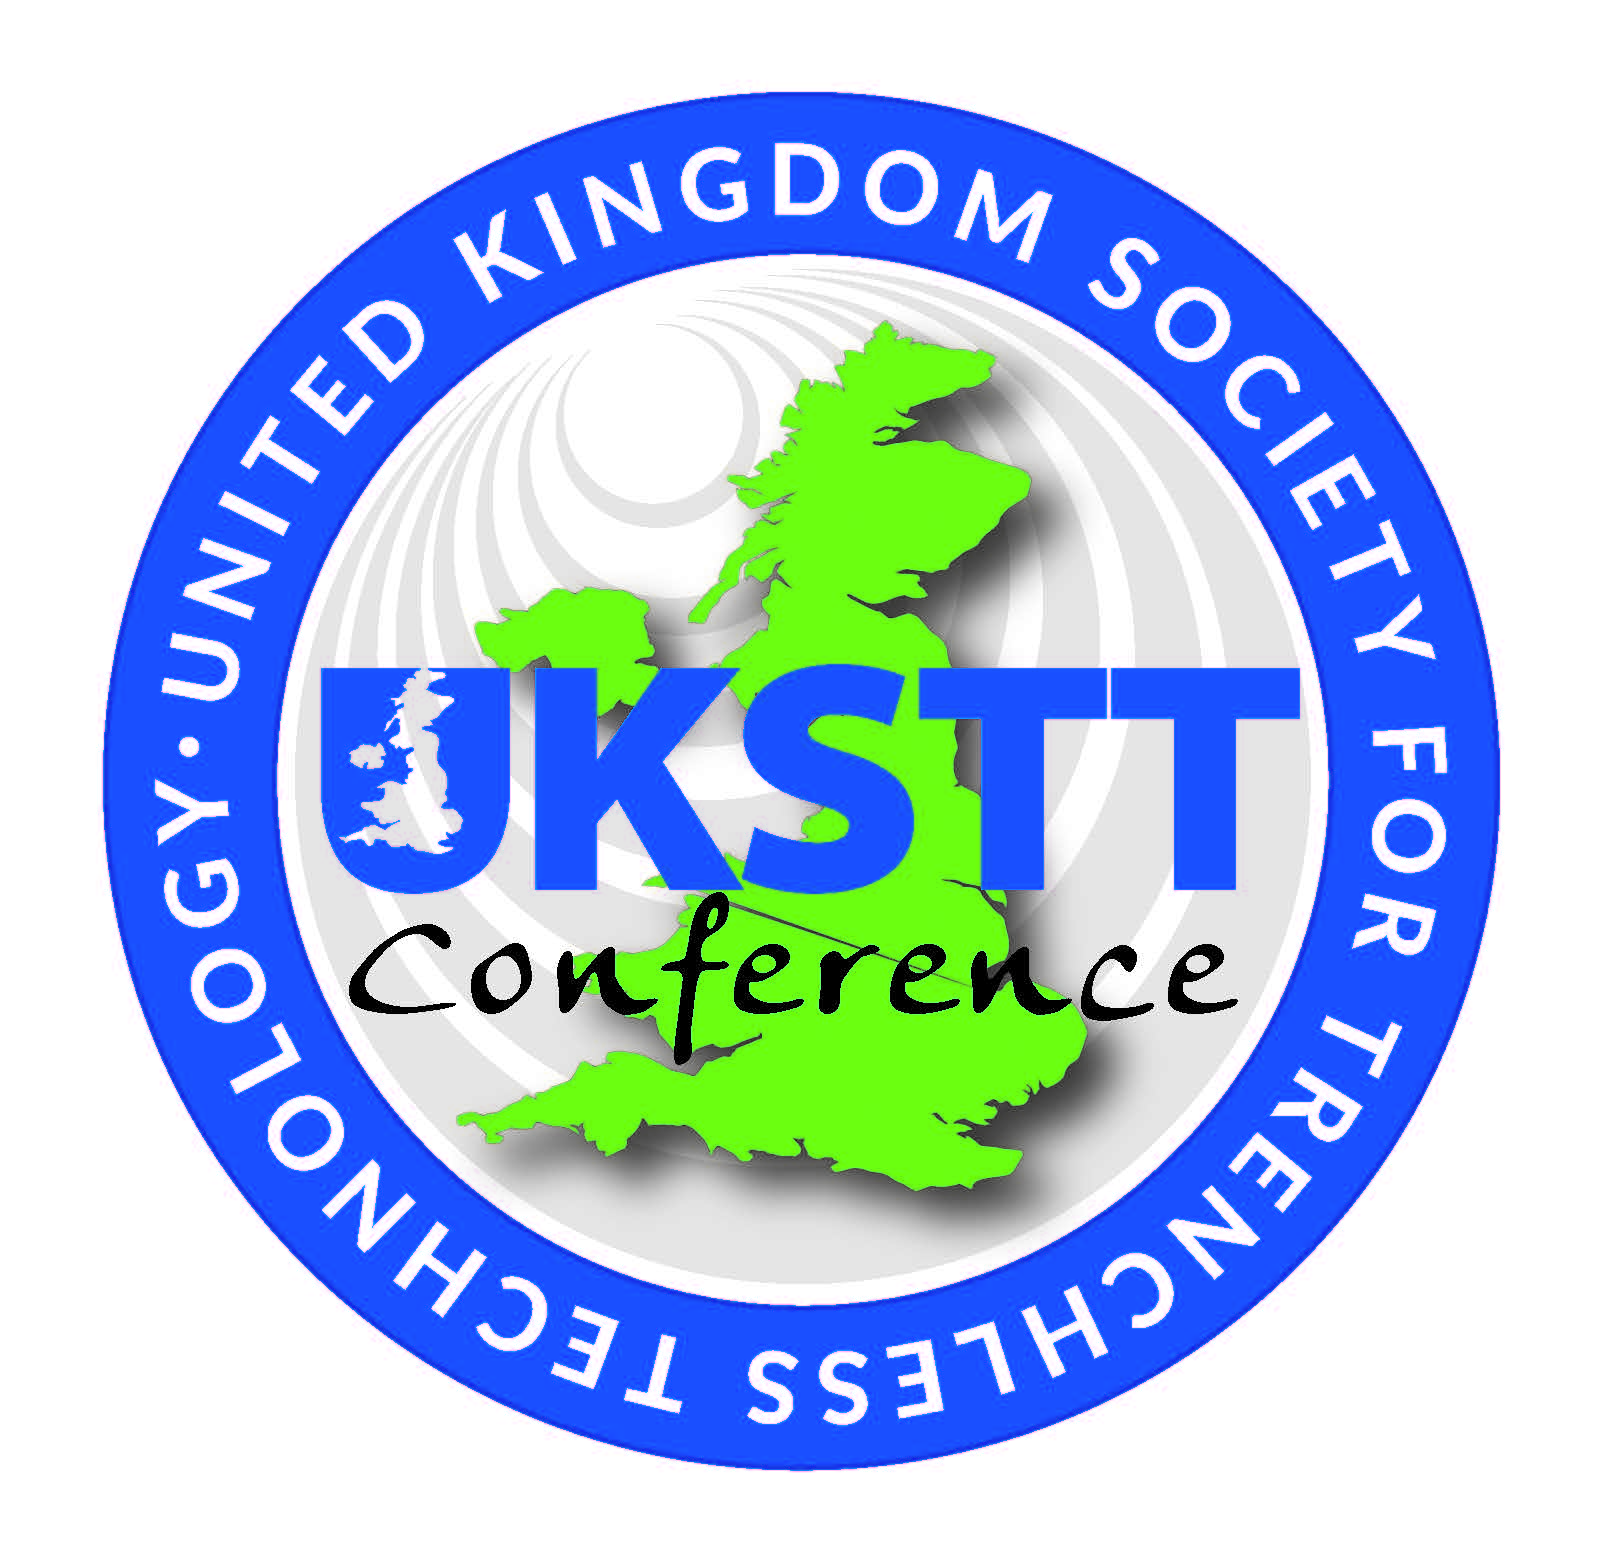 UKSTT new conference logo both